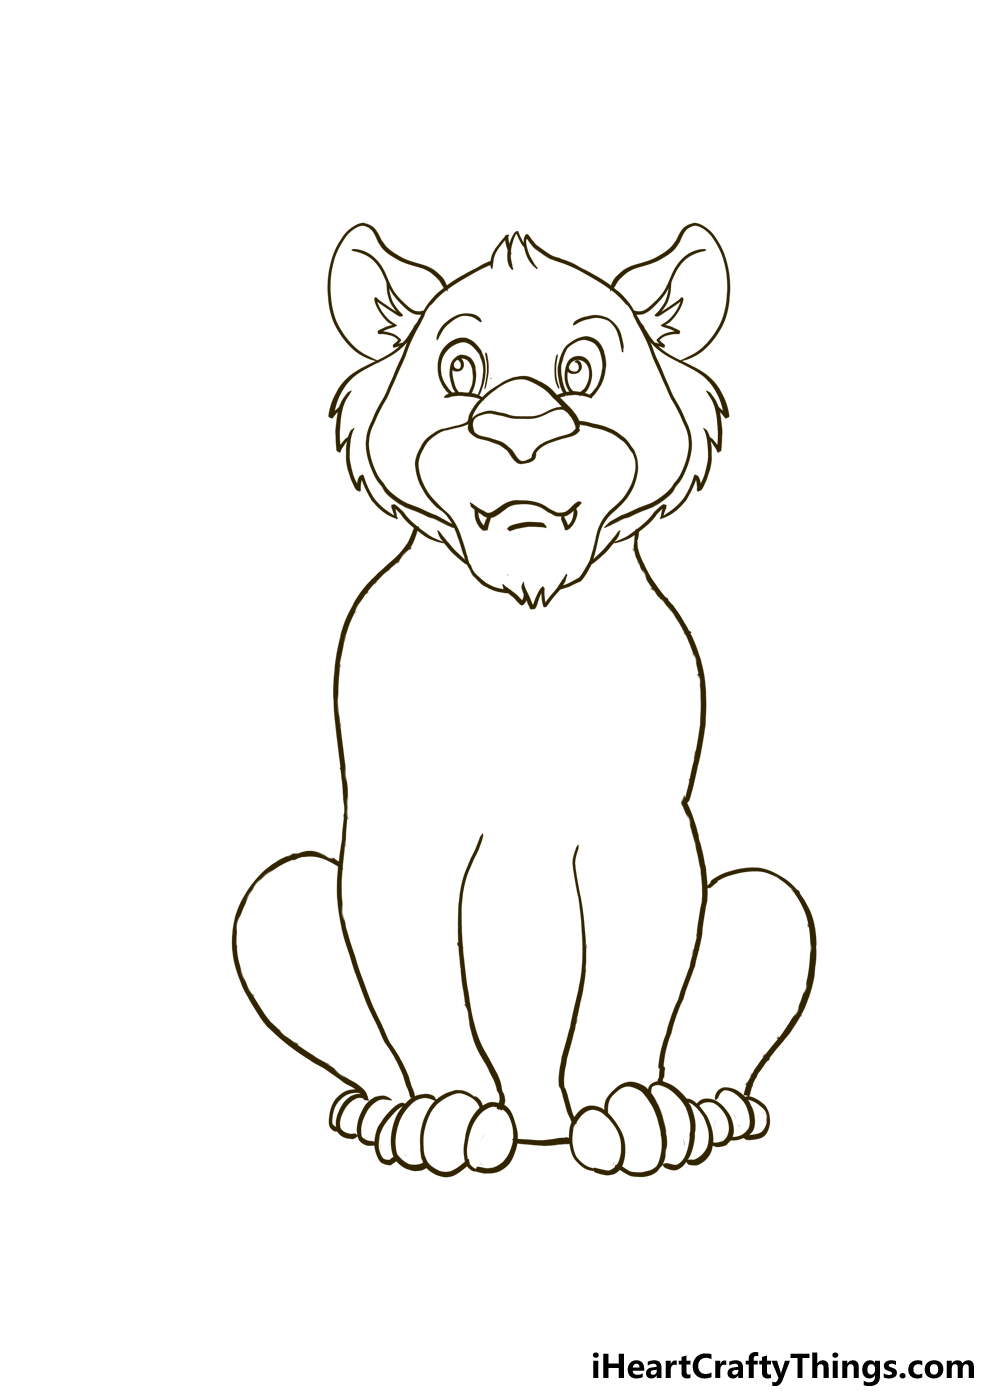 How to Draw A Cartoon Tiger step 4